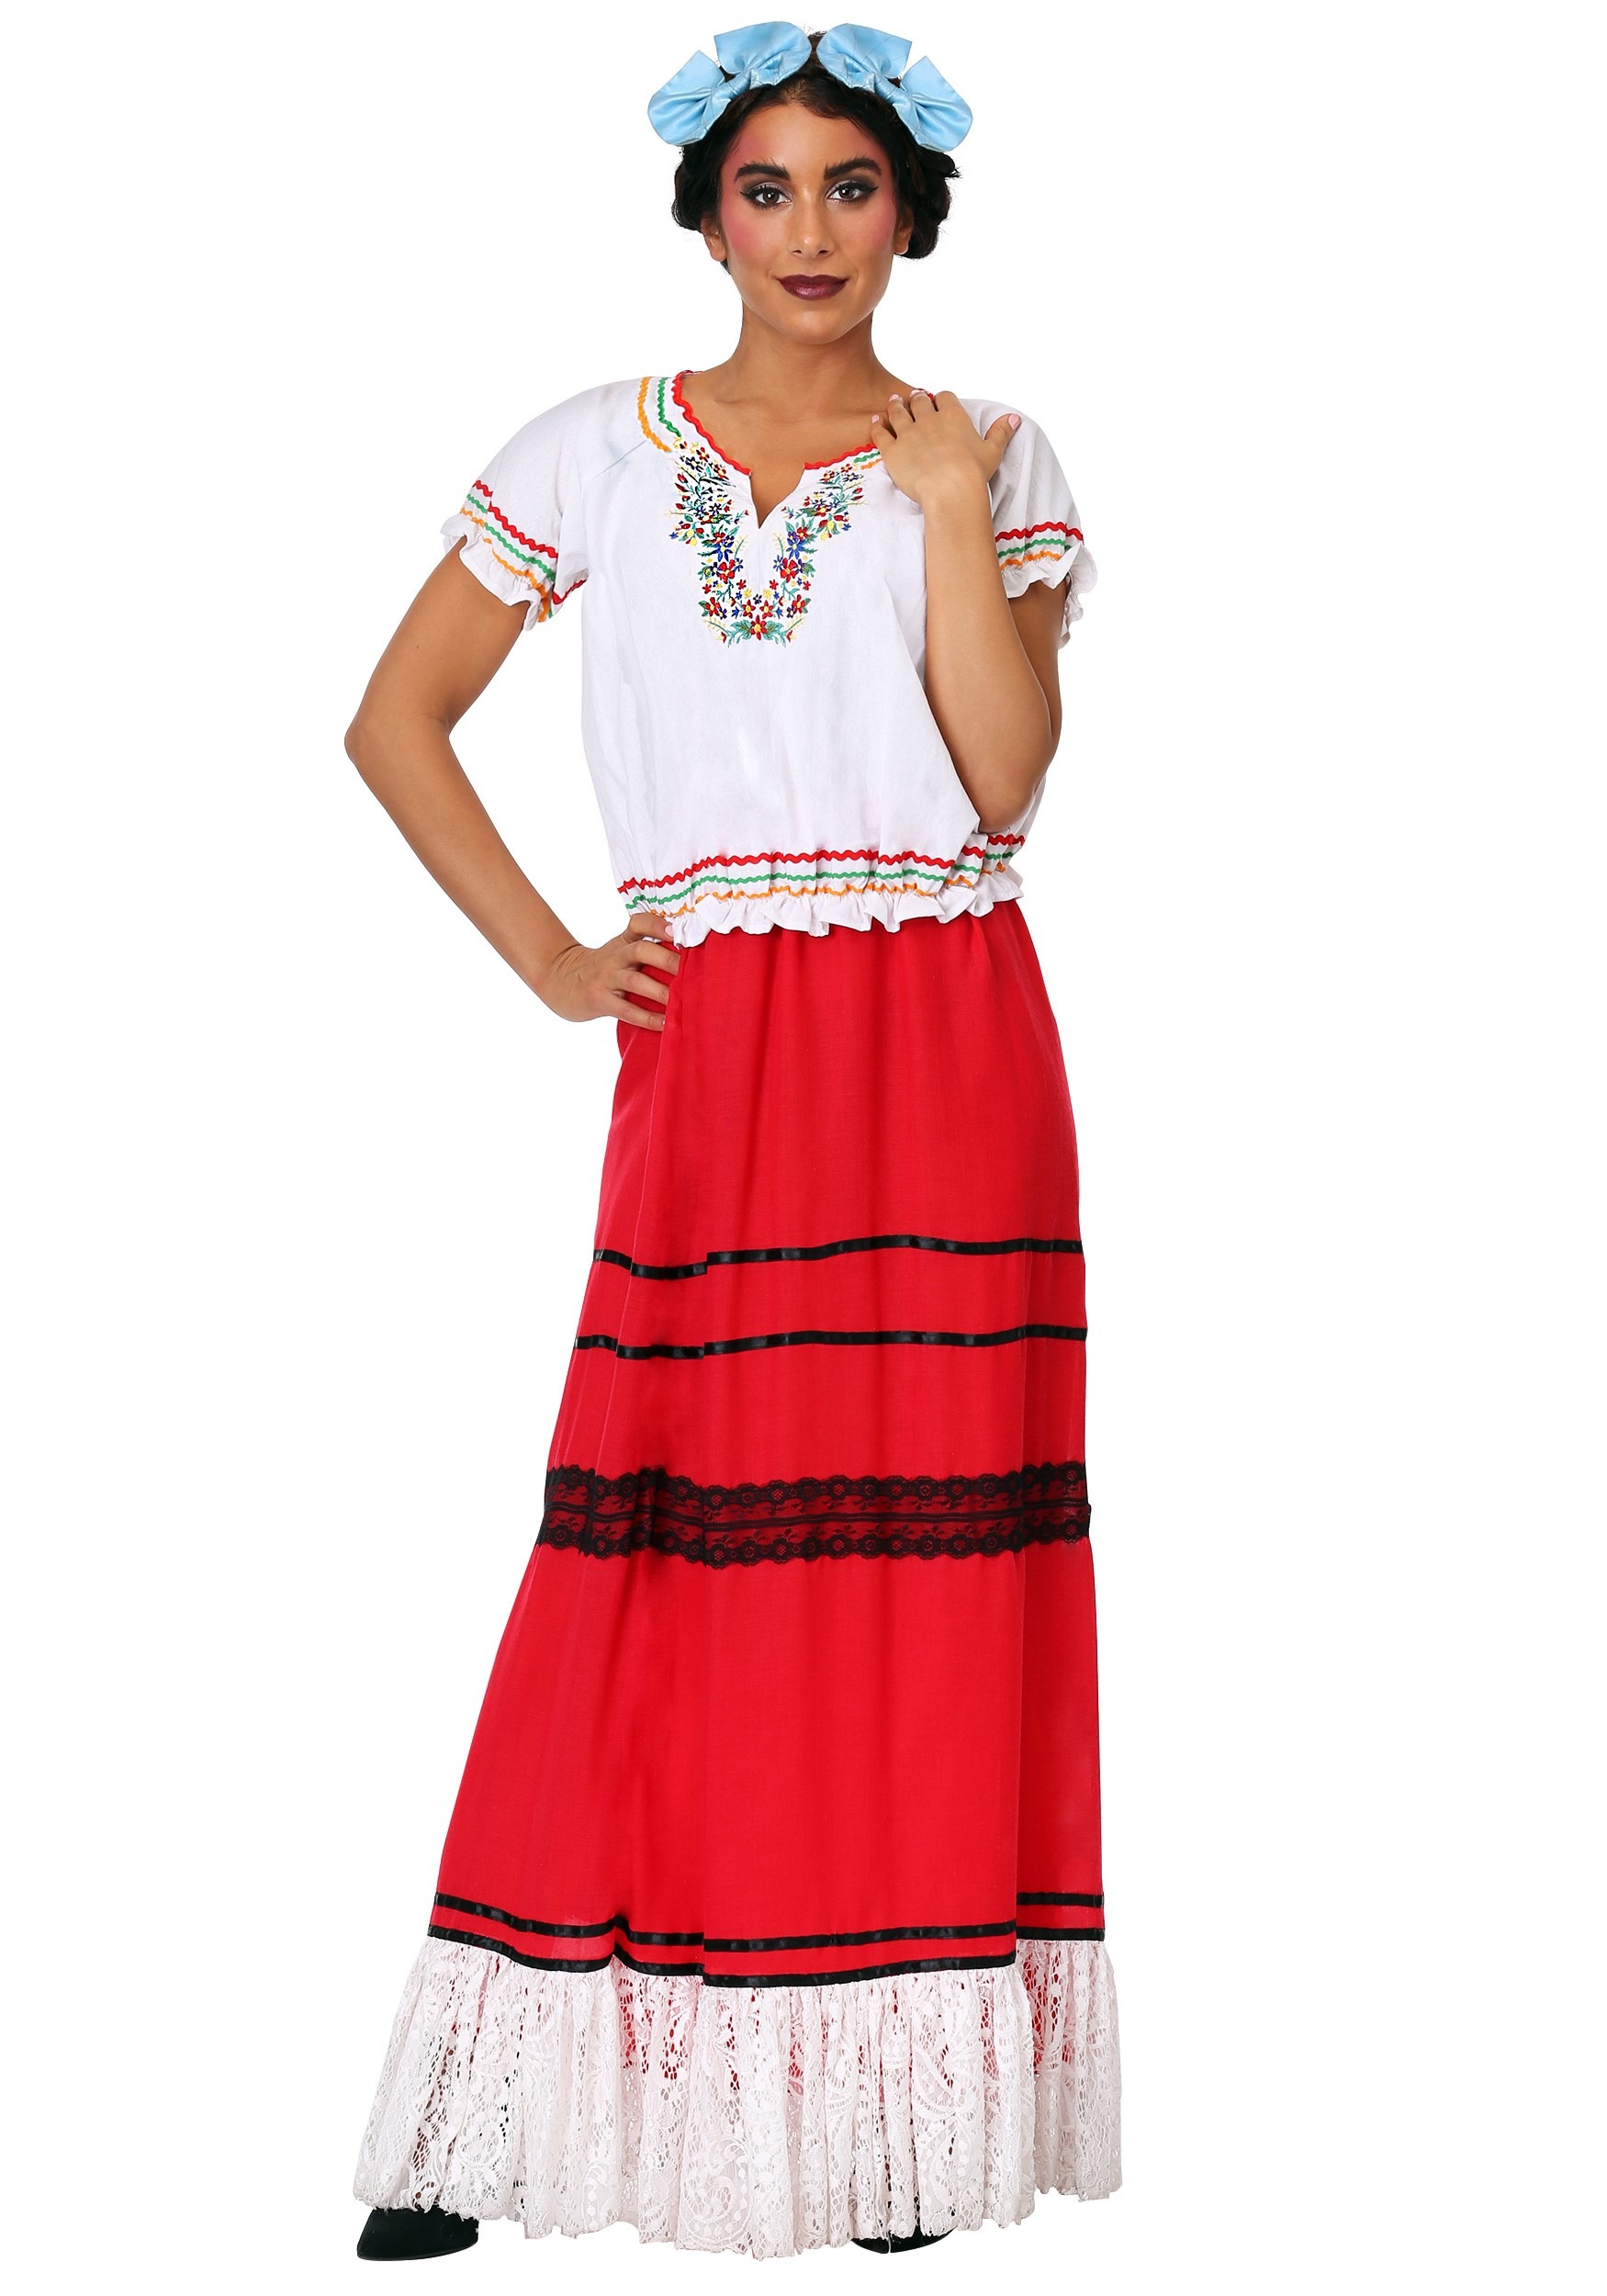 Image of Red Frida Kahlo Women's Costume ID FUN6997AD-M